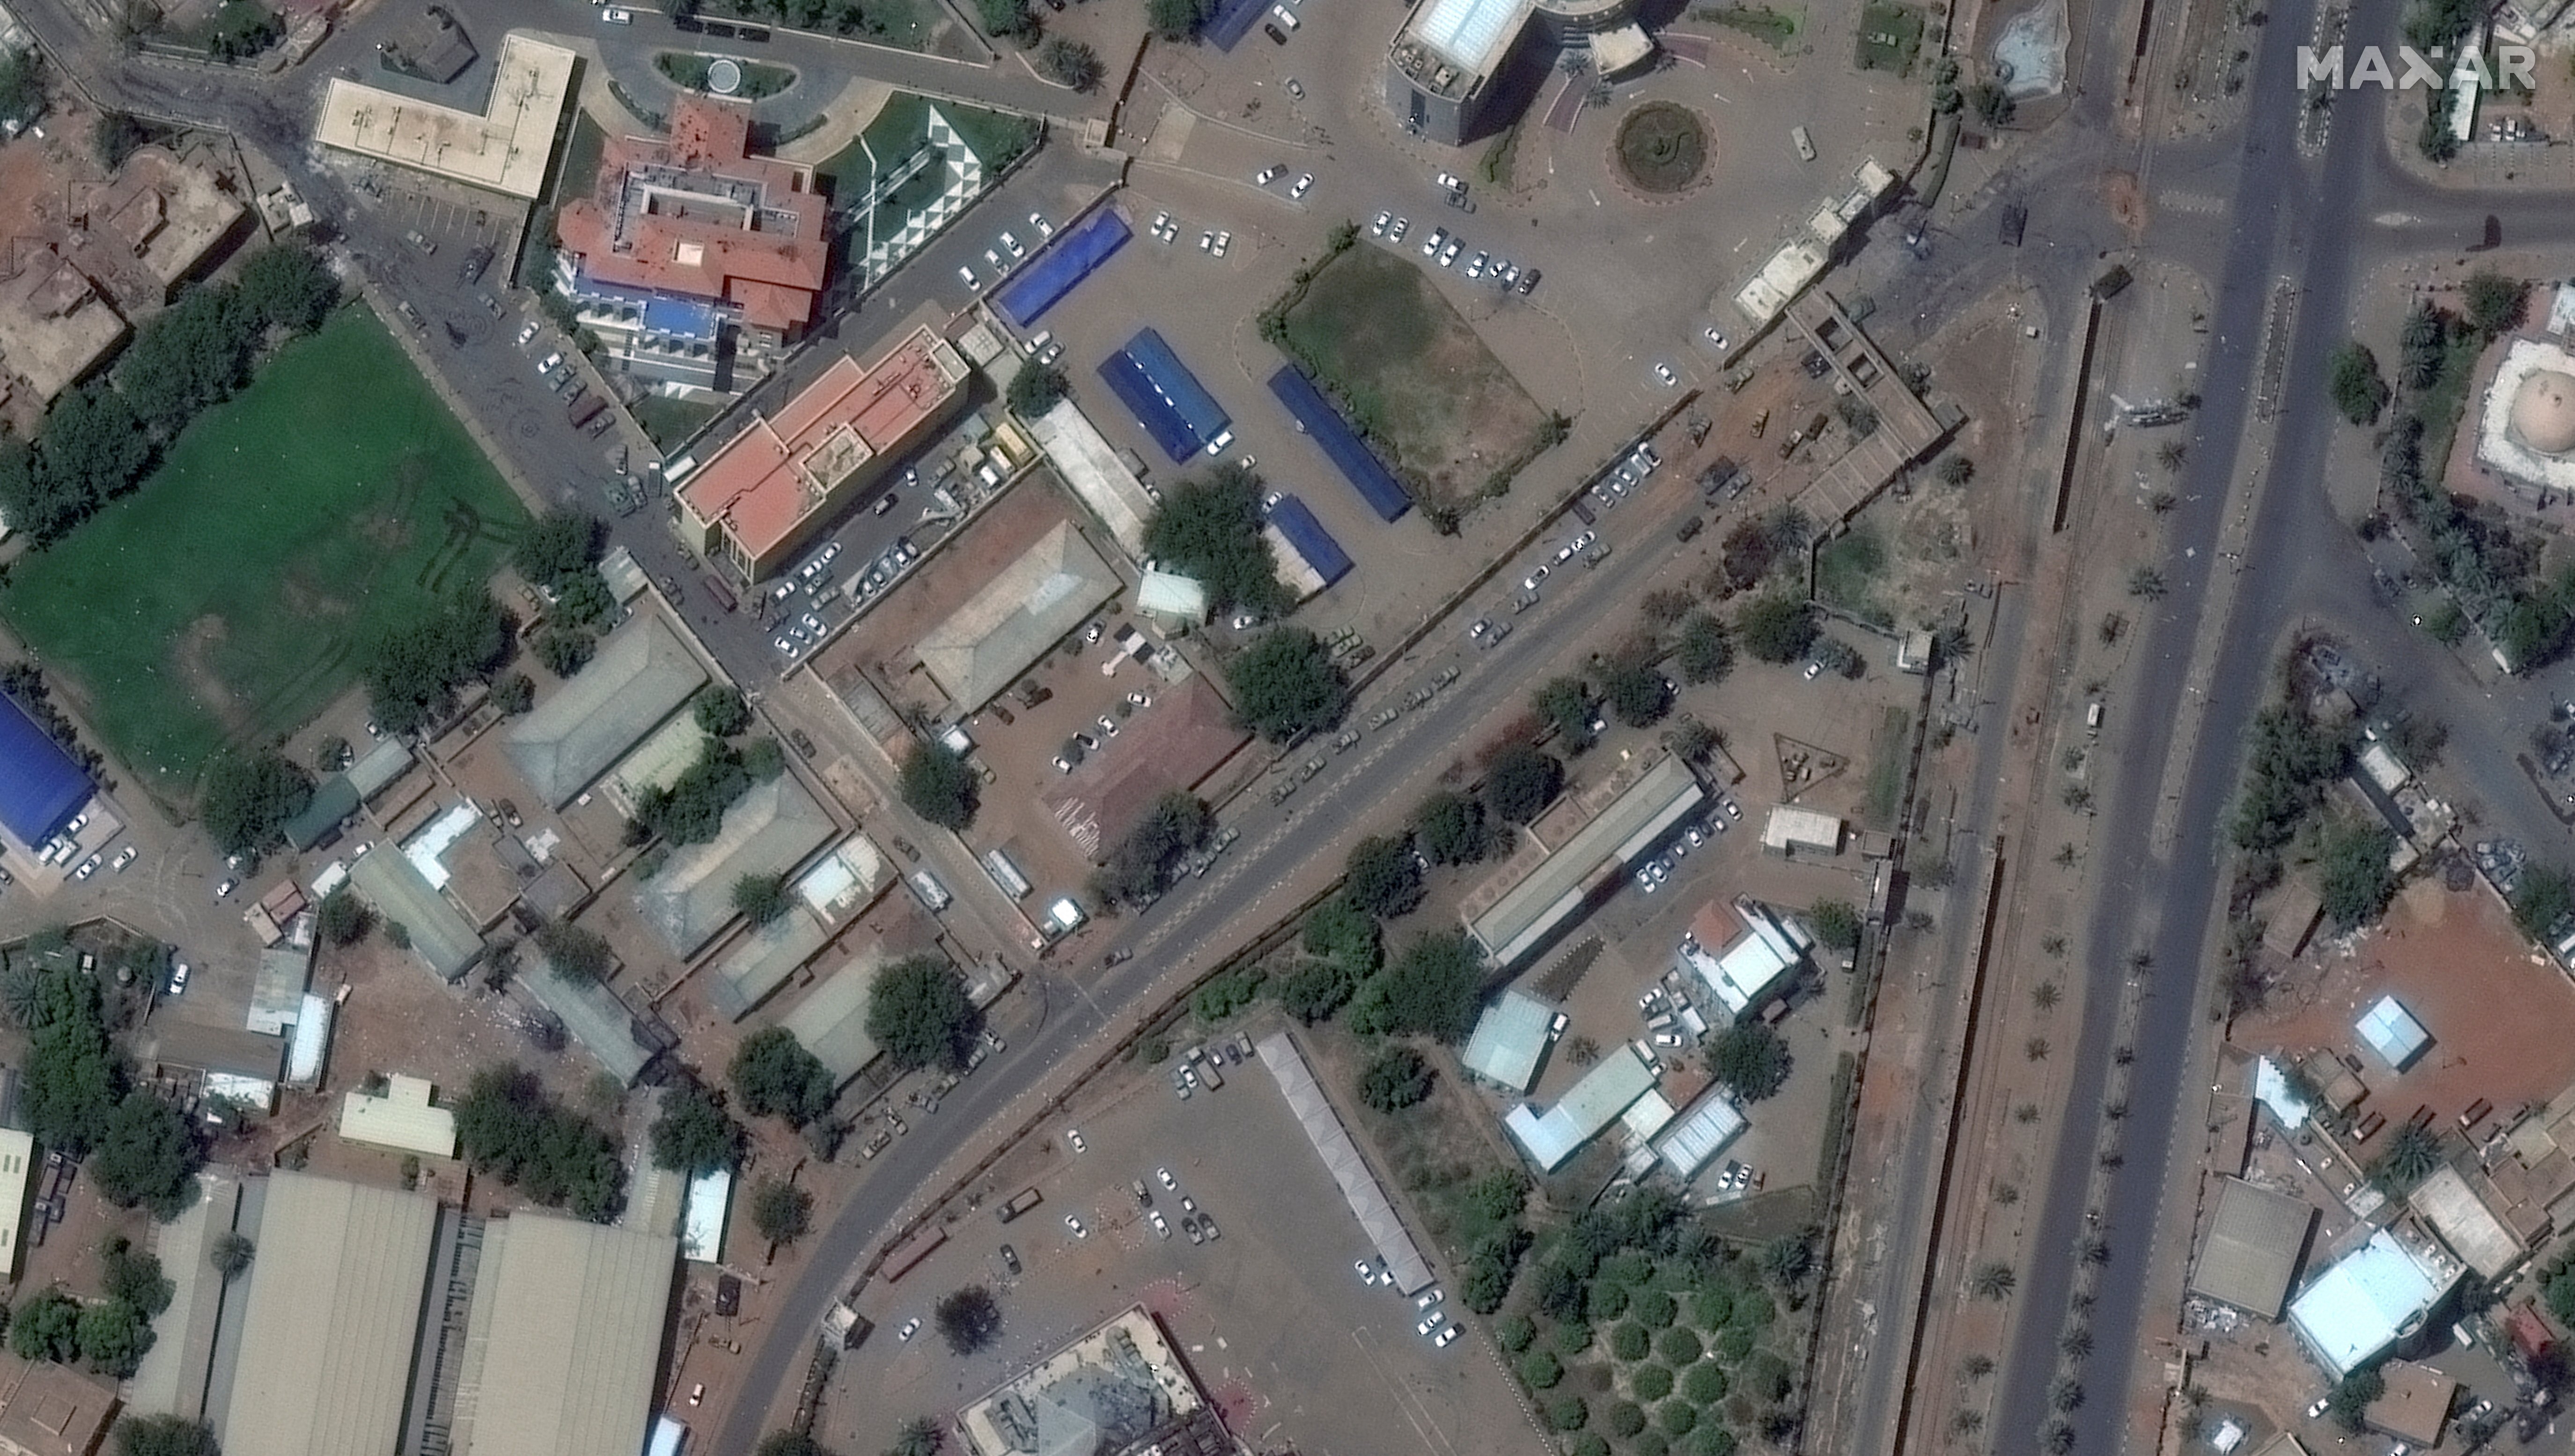 Satellite image shows military deployment in Khartoum